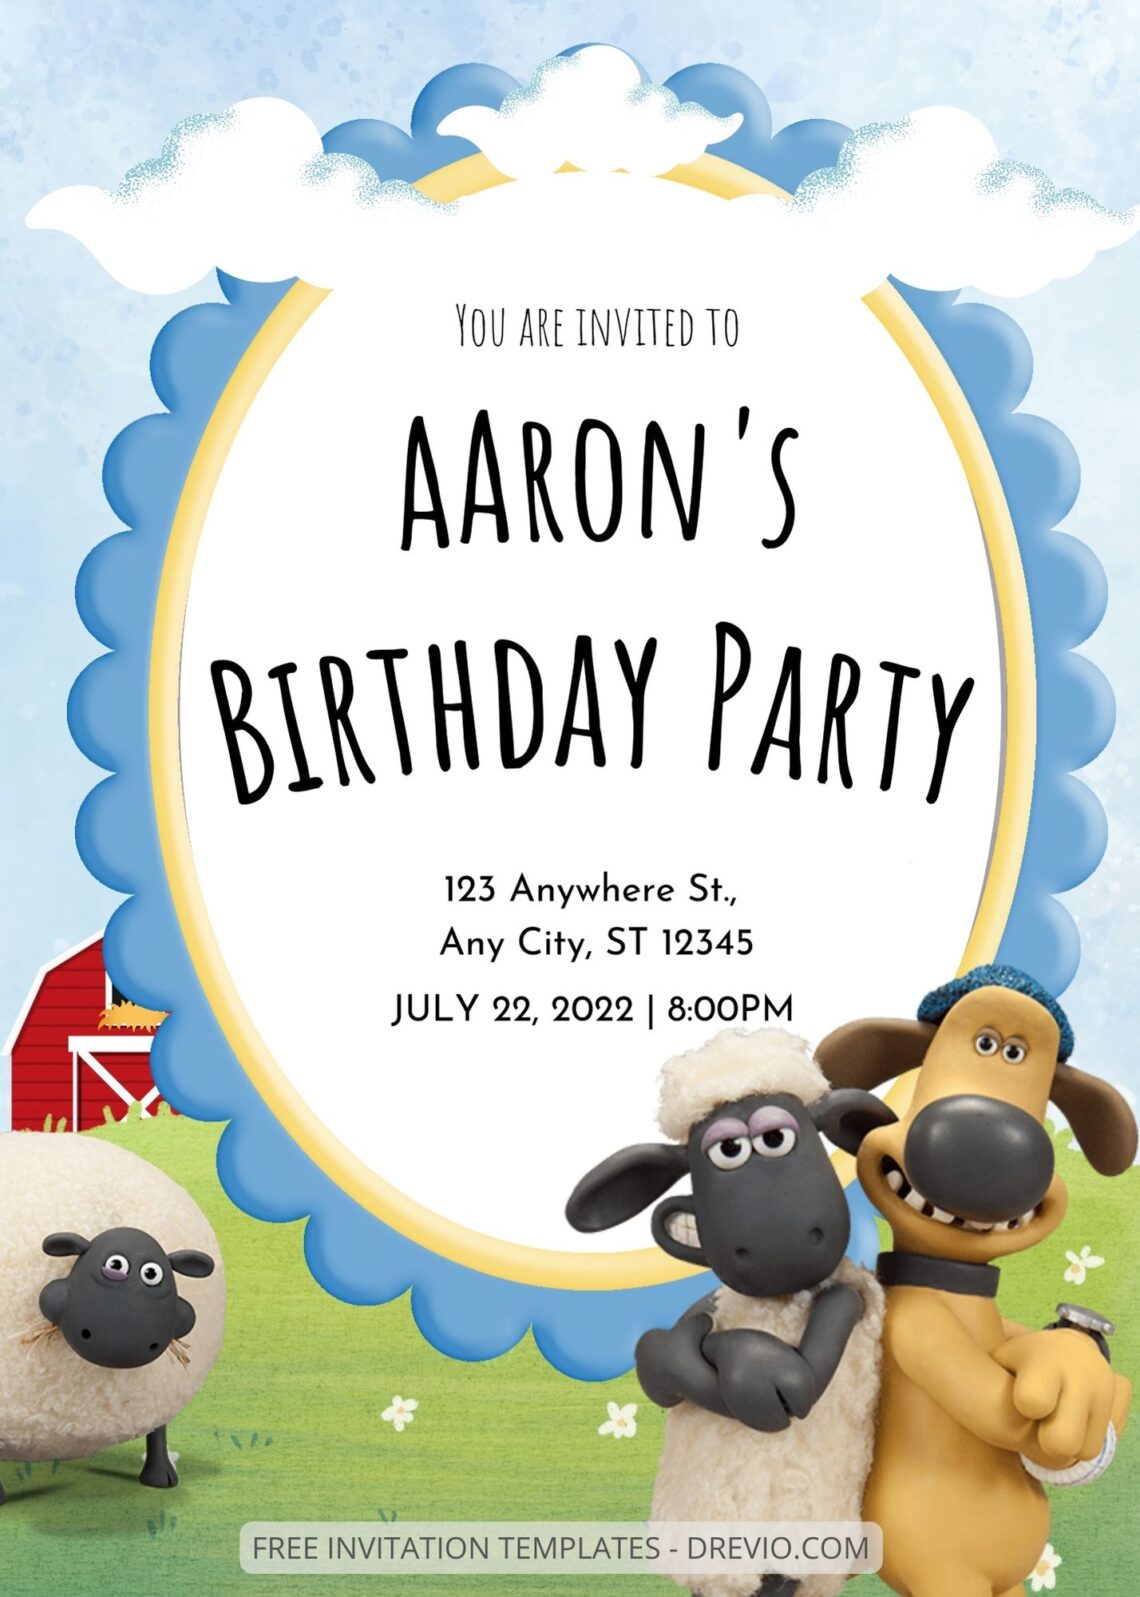 FREE EDITABLE - 9+ Shaun The Sheep Canva Birthday Invitation Templates One